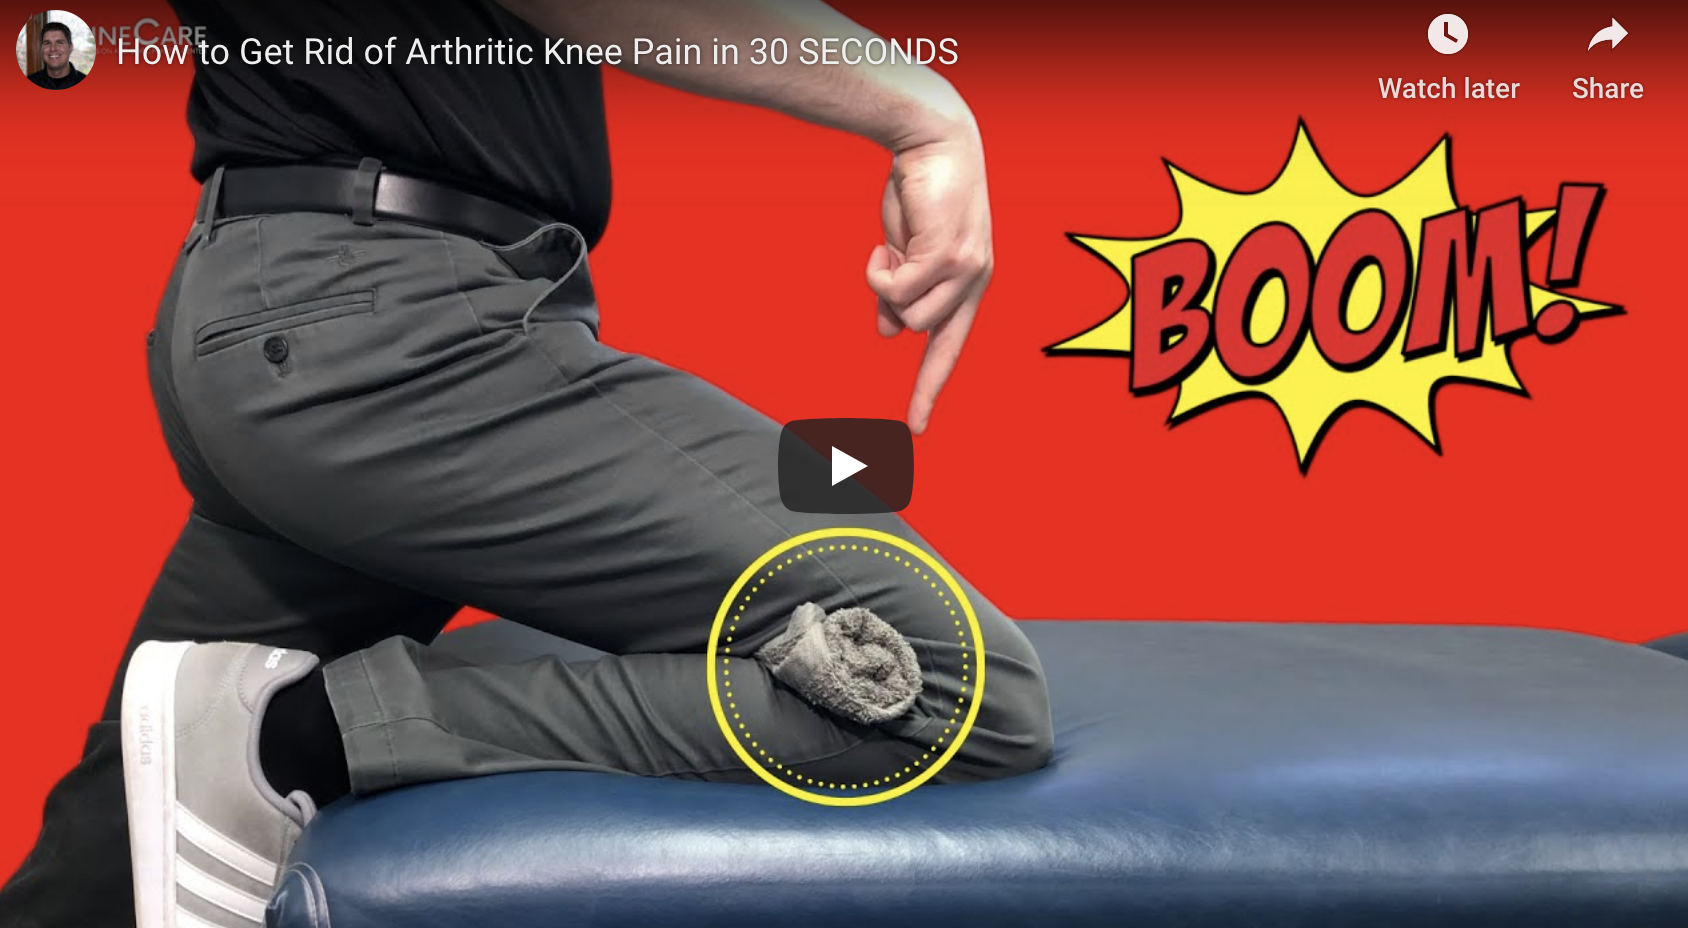 Dr. Rowe Knee Pain